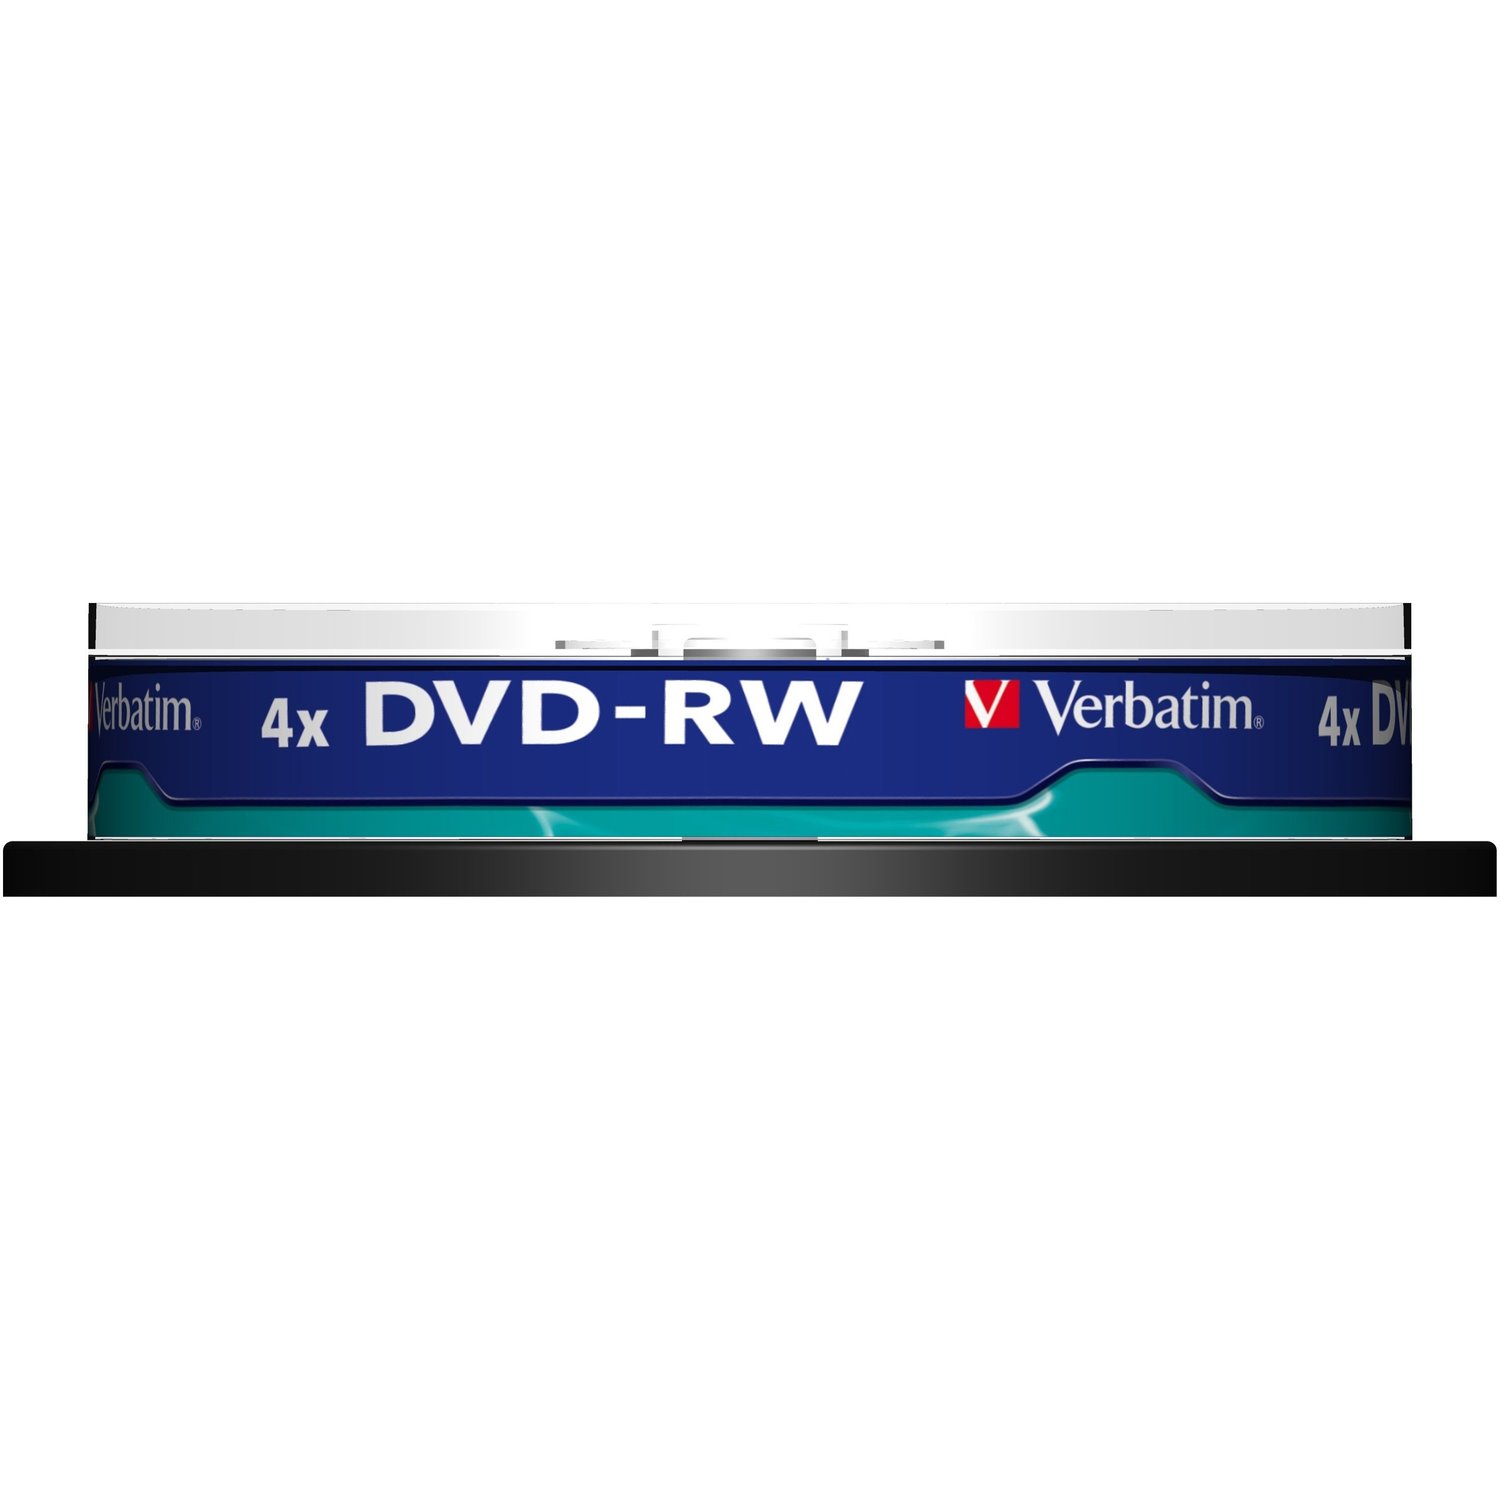 Verbatim DataLifePlus DVD Rewritable Media - DVD-RW - 4x - 4.70 GB - 10 Pack Spindle